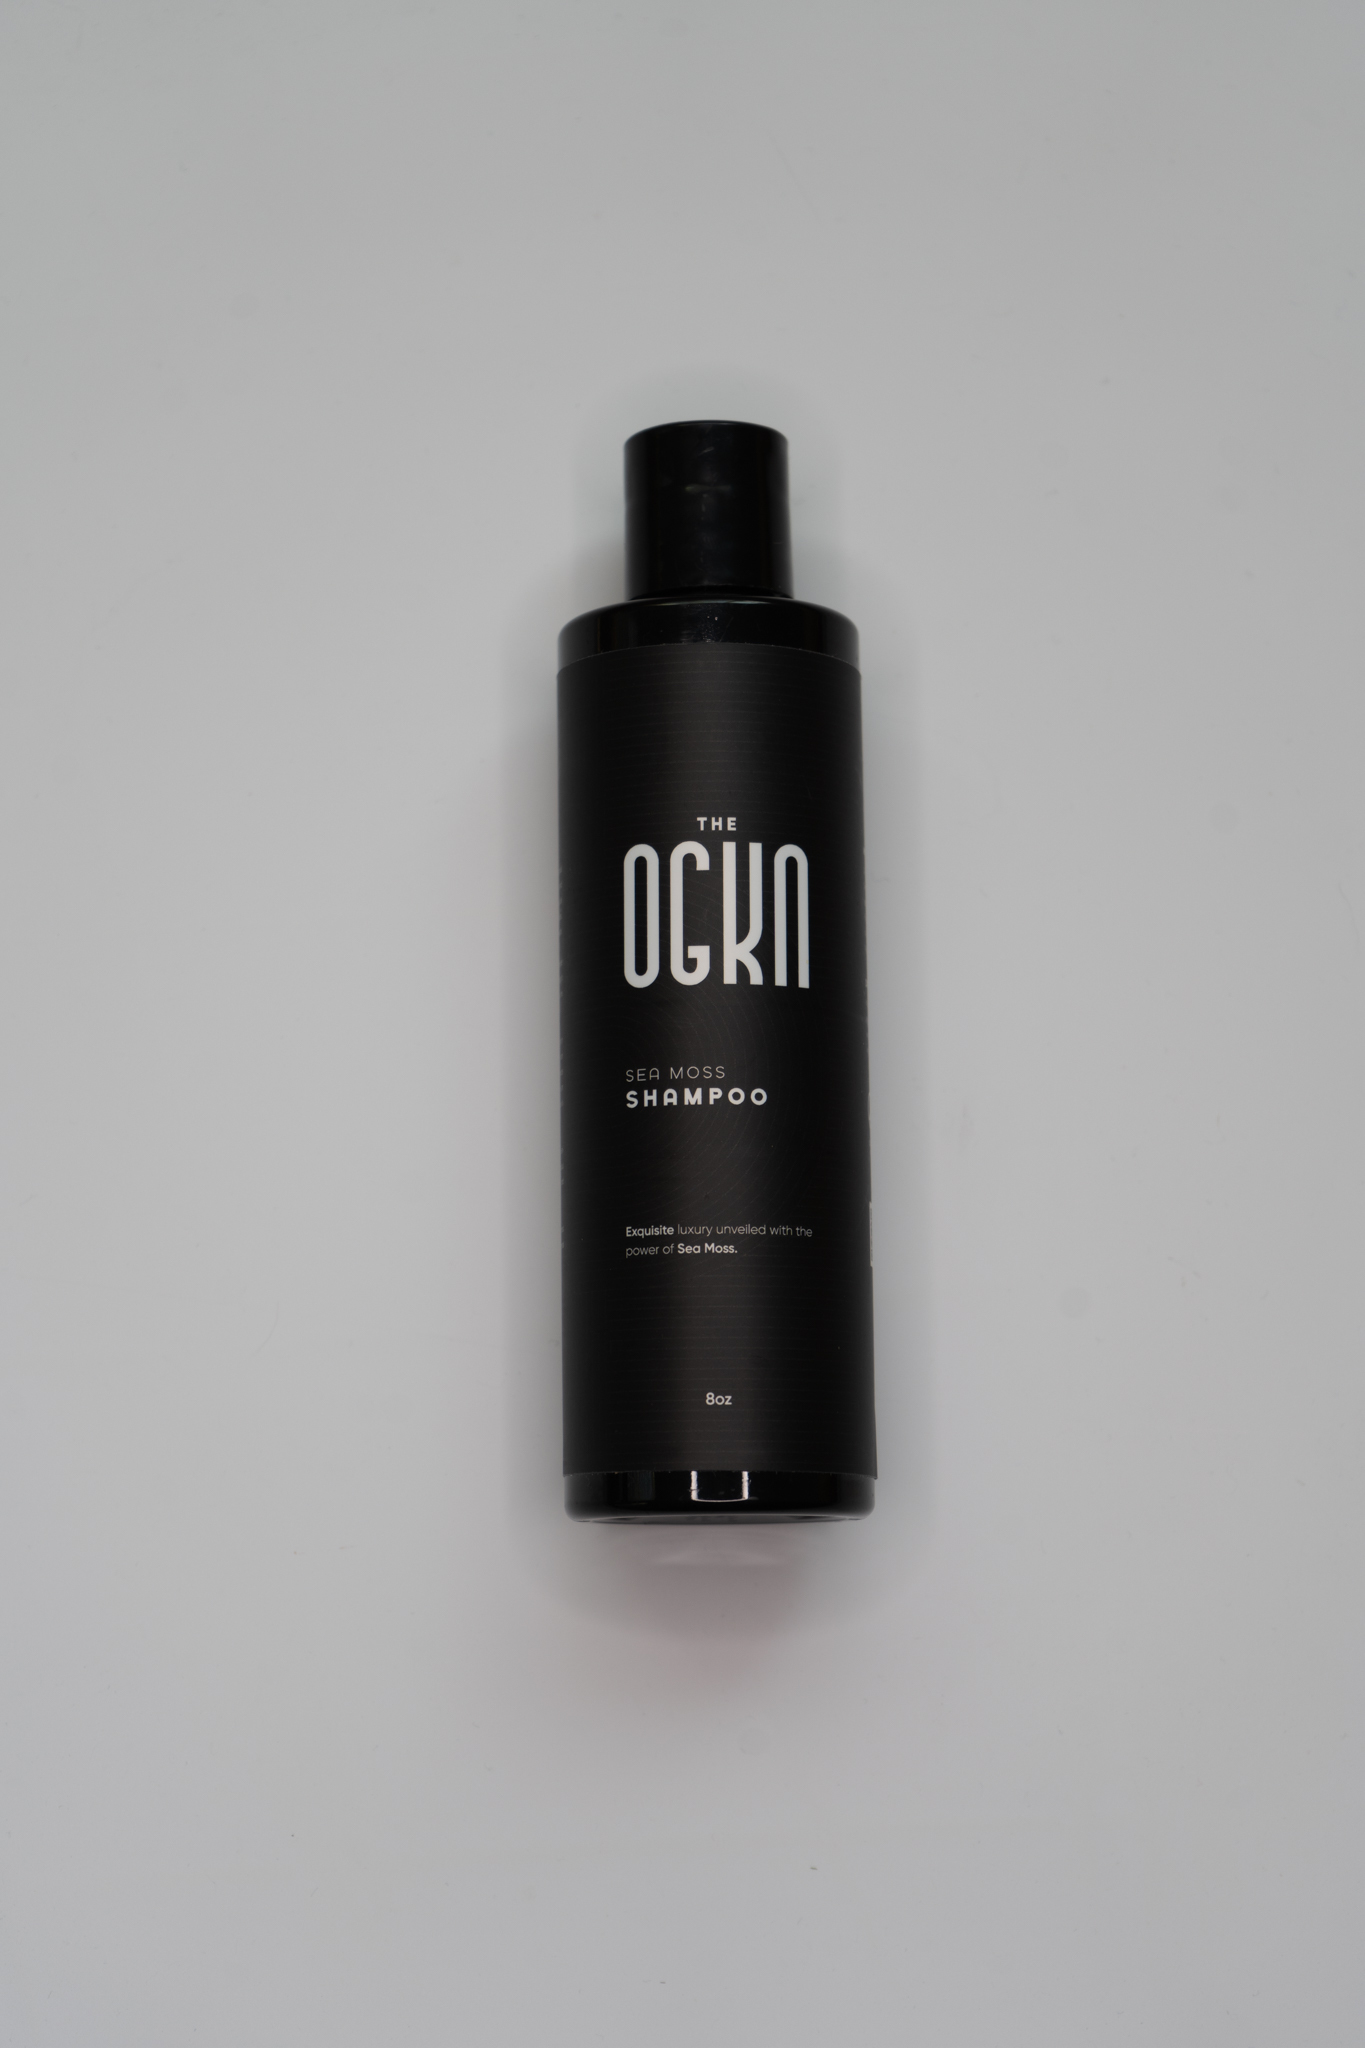 Premium Sea Moss Strengthening Shampoo | The Original Kevin Nguyen (OGKN)